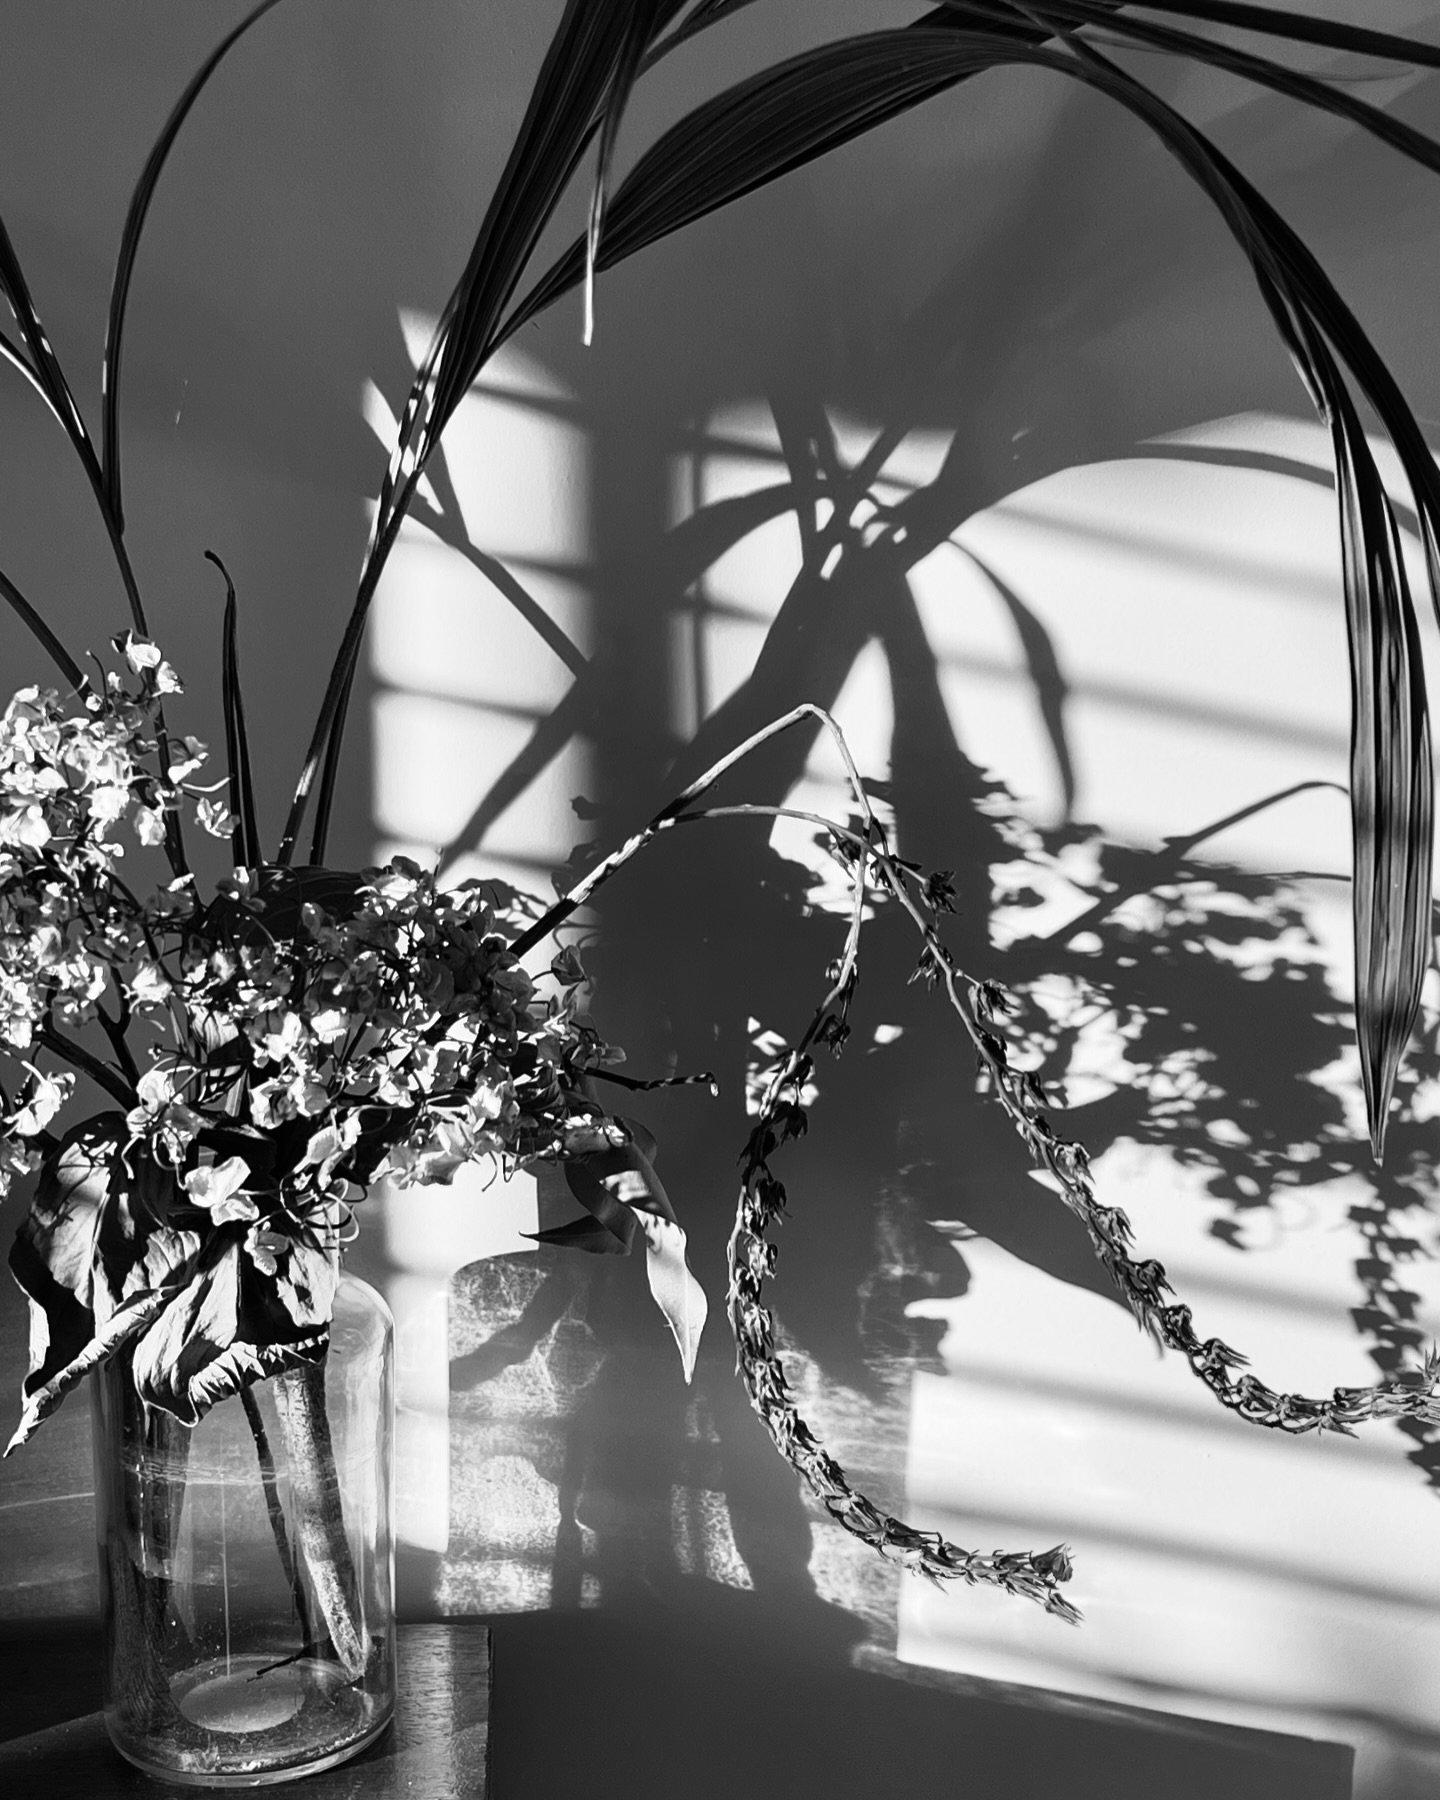 Keep still&hellip;
.
.
.
#dieweltistsch&ouml;n #shadows #morninglight #driedflowers #sylvianevistic